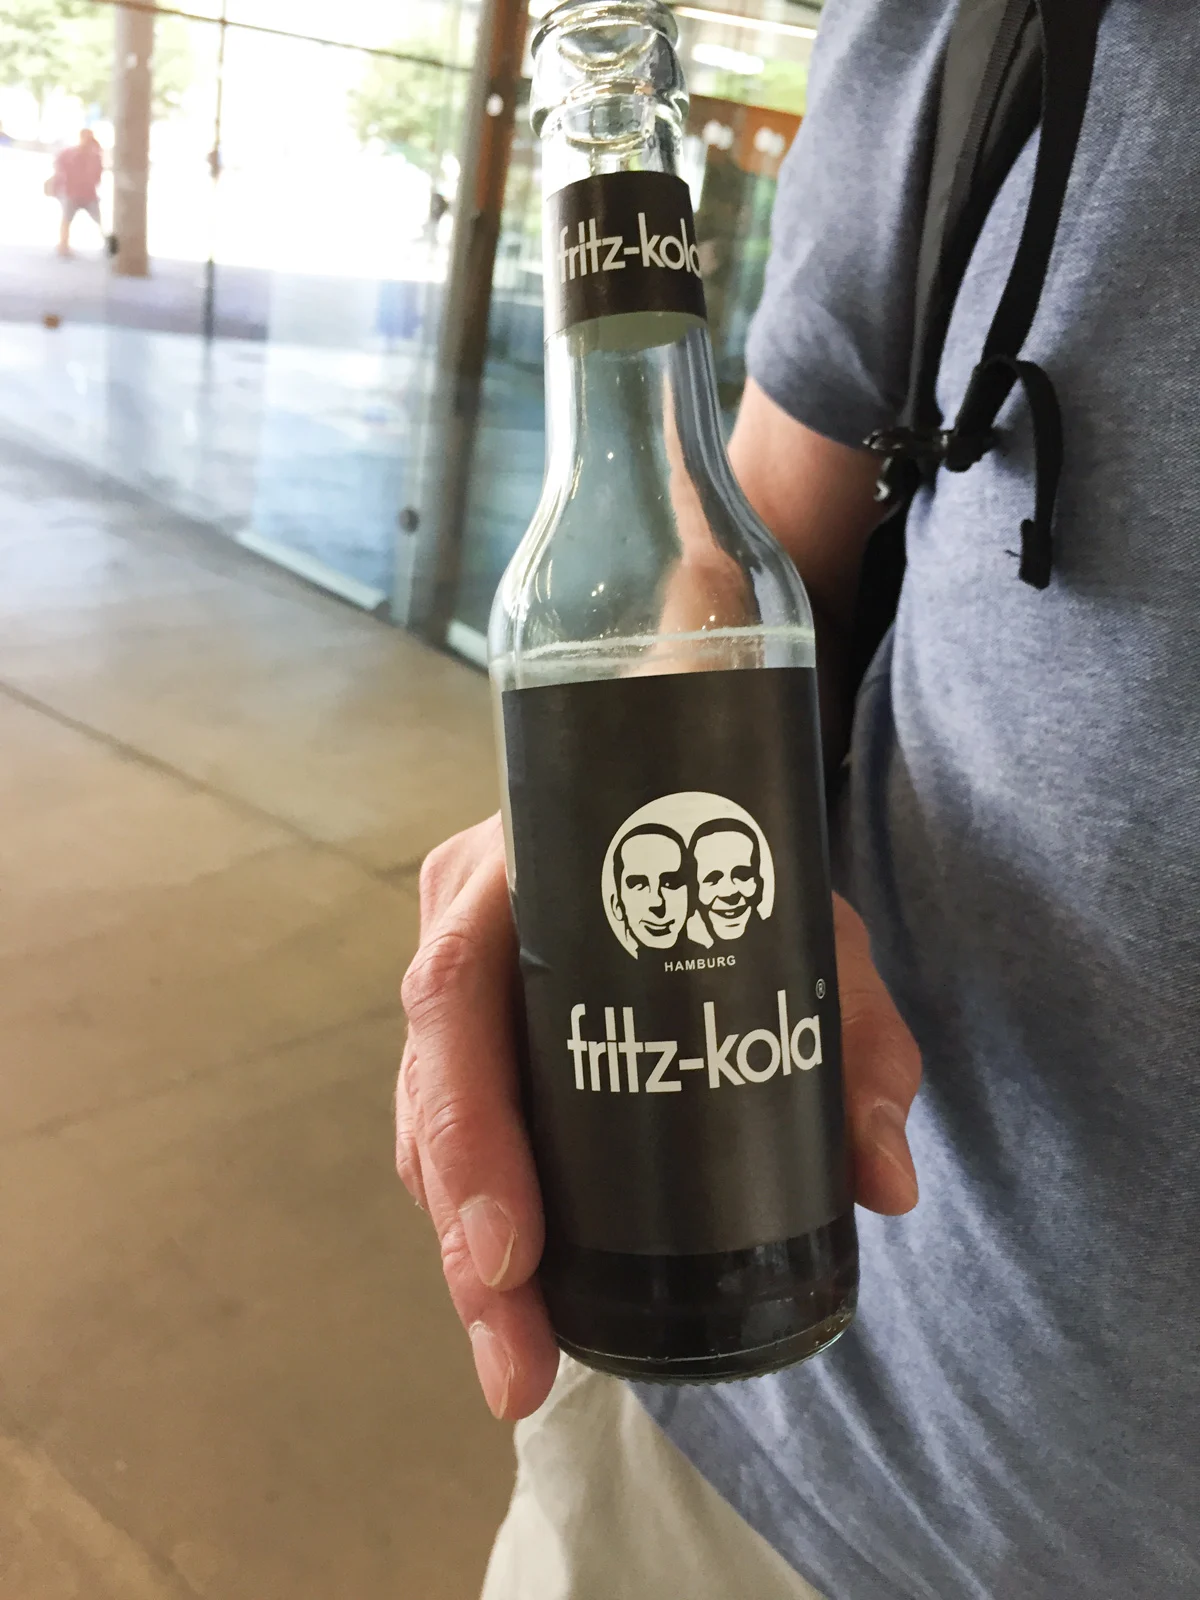 Fritz cola